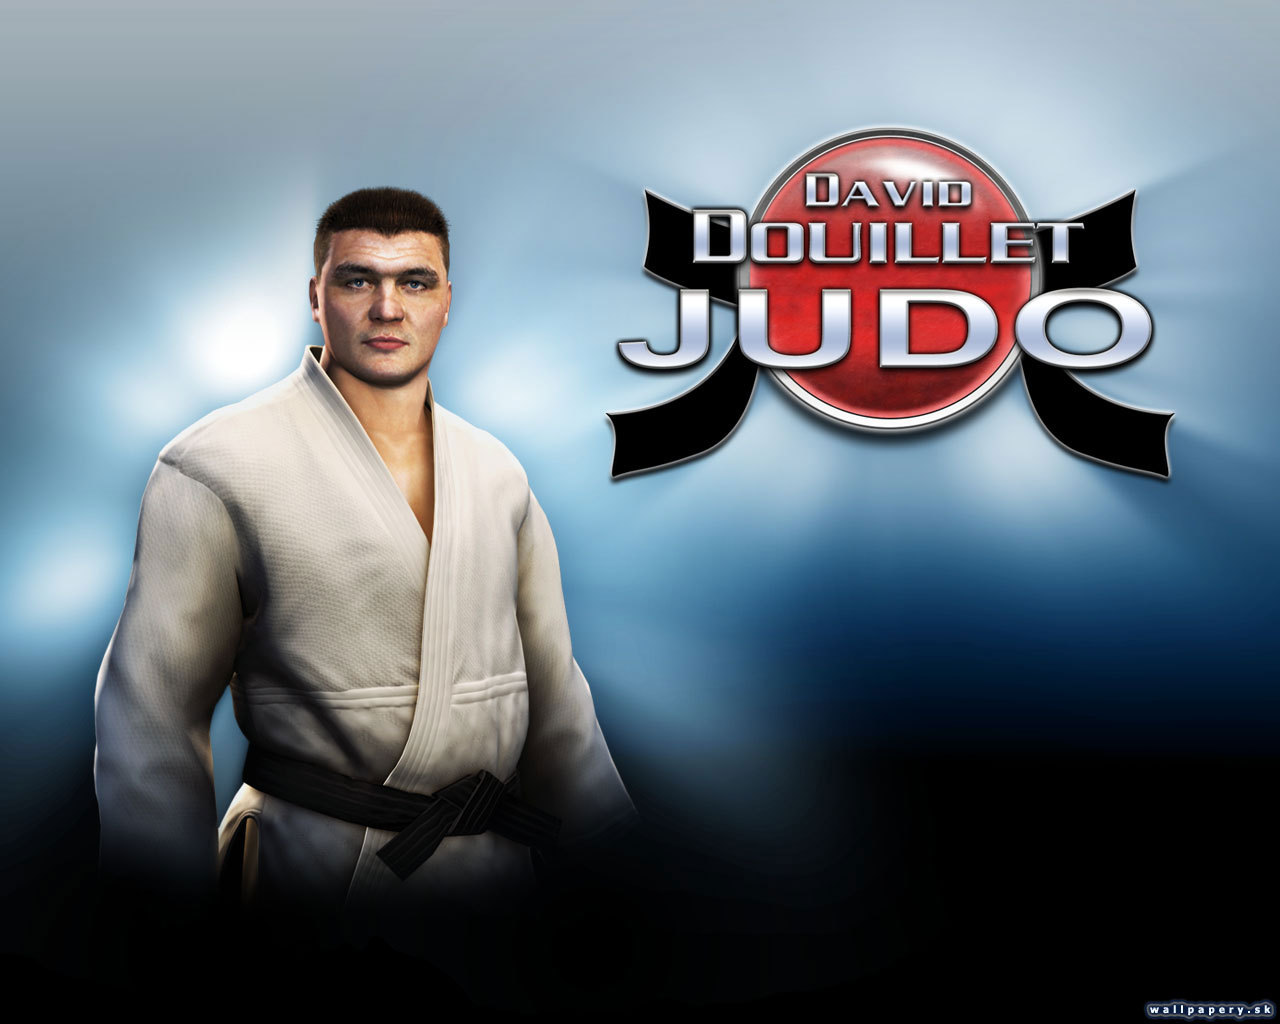 David Douillet Judo - wallpaper 1